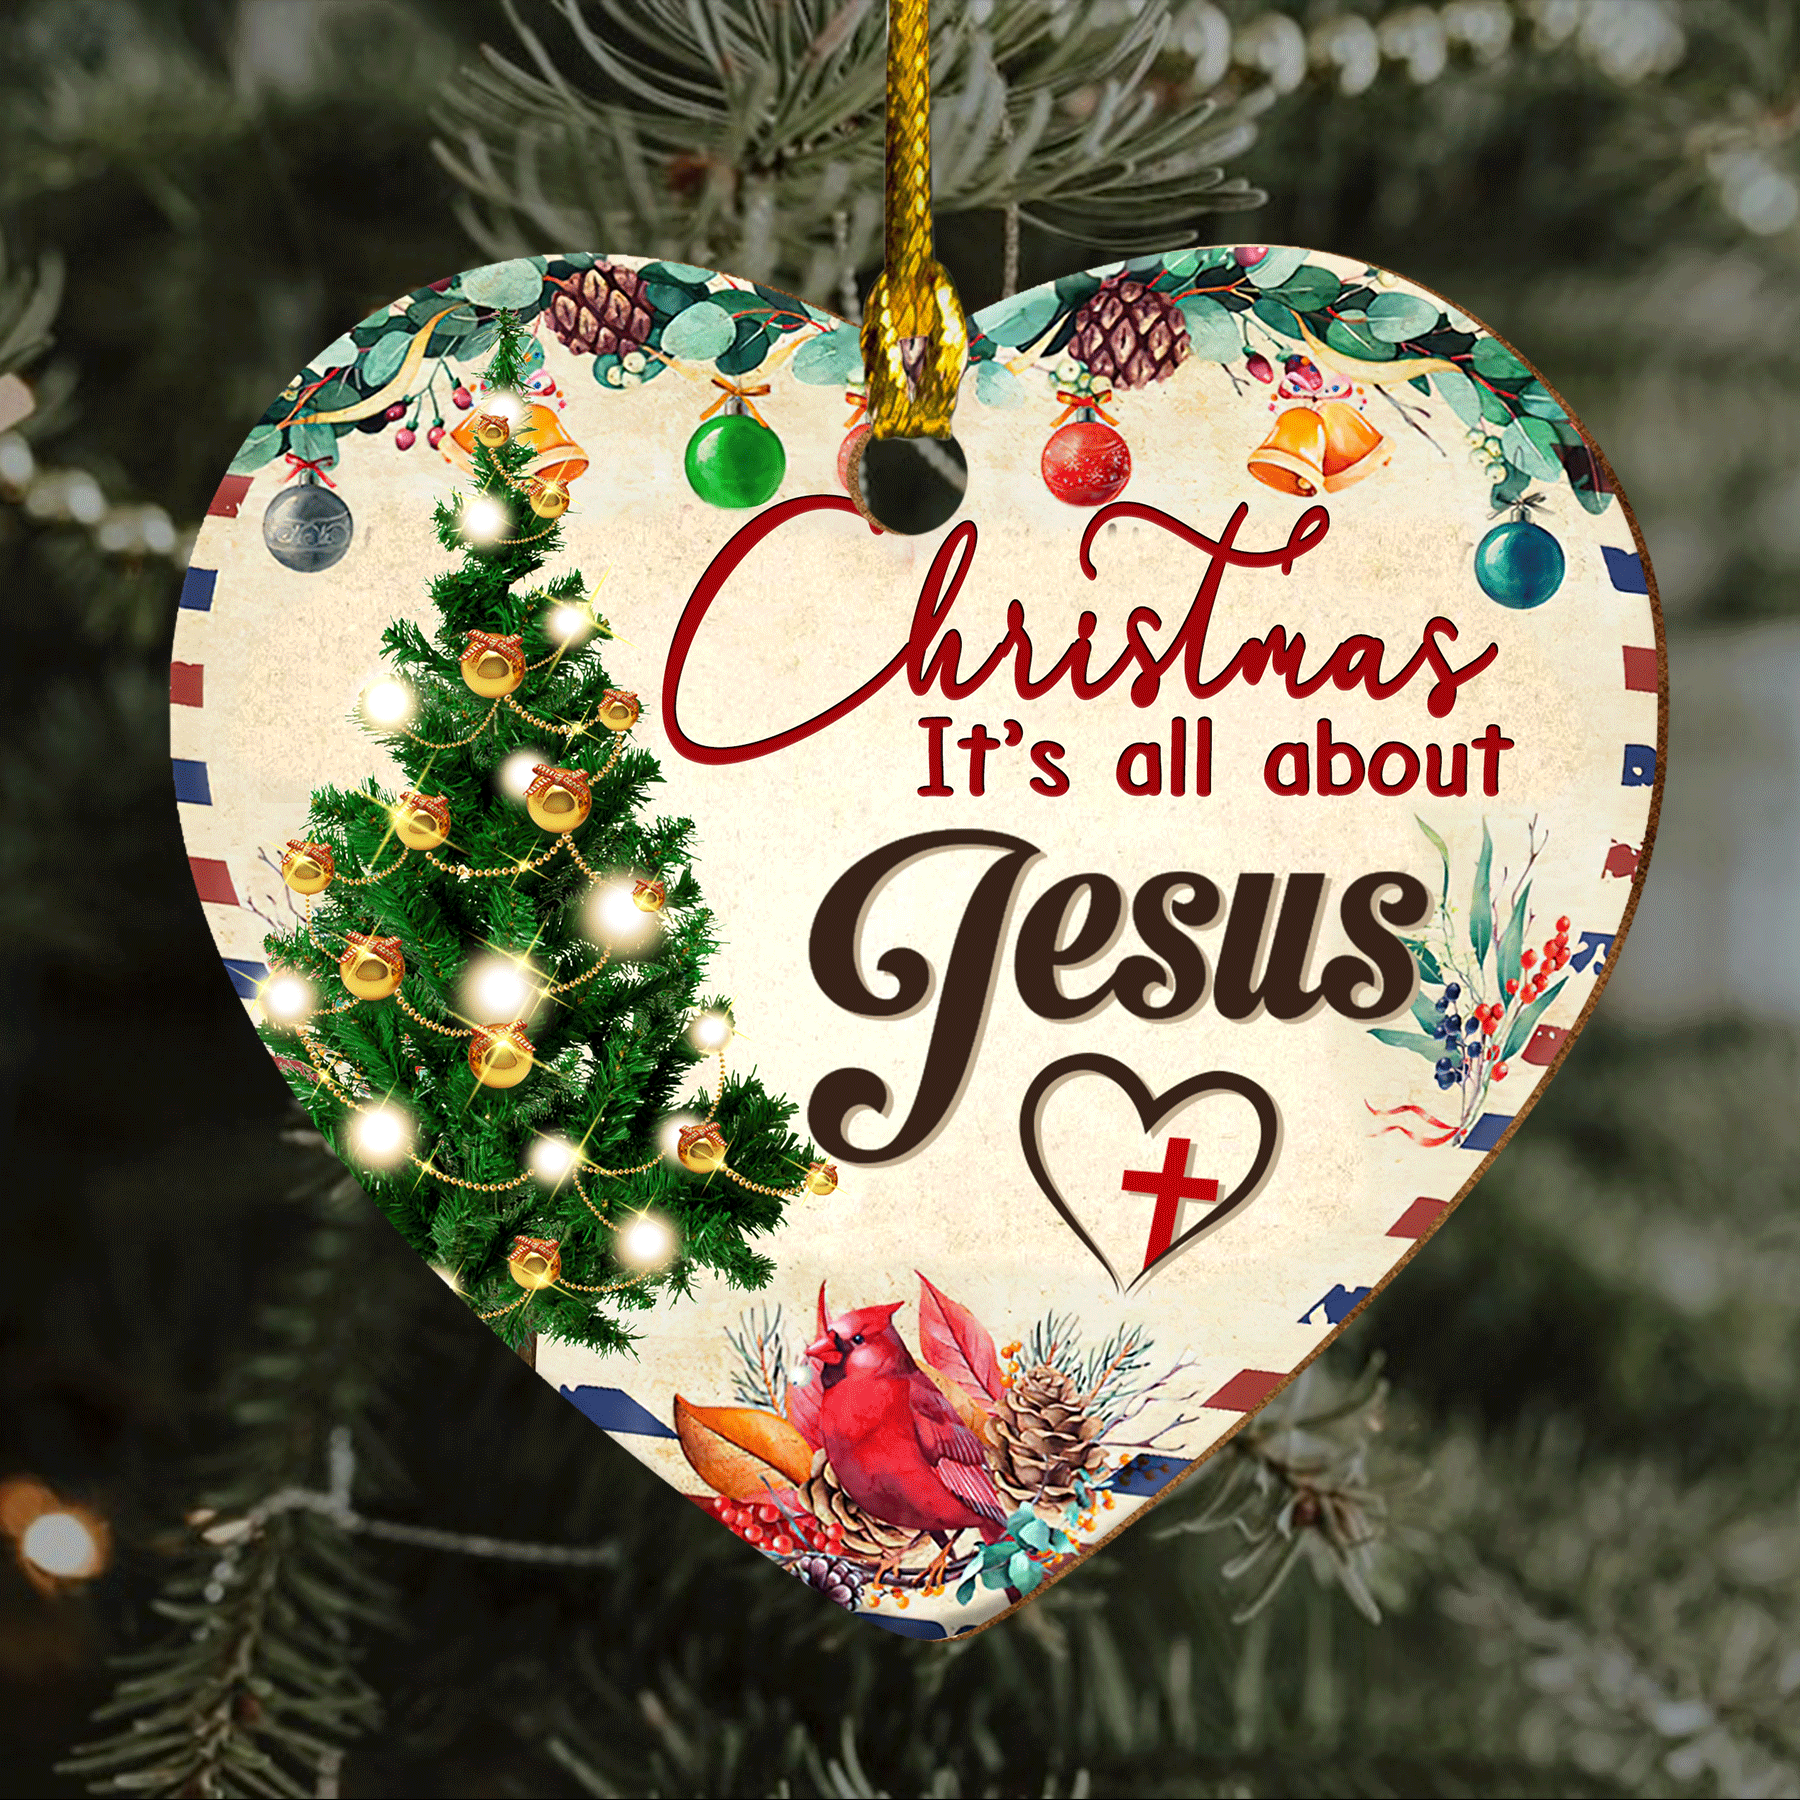 Jesus Heart Ceramic Ornament - Cardinal, Chrismas Tree, Cross Symbol, Christmas It's All About Jesus Ceramic Ornament Gifts For Religious Christian